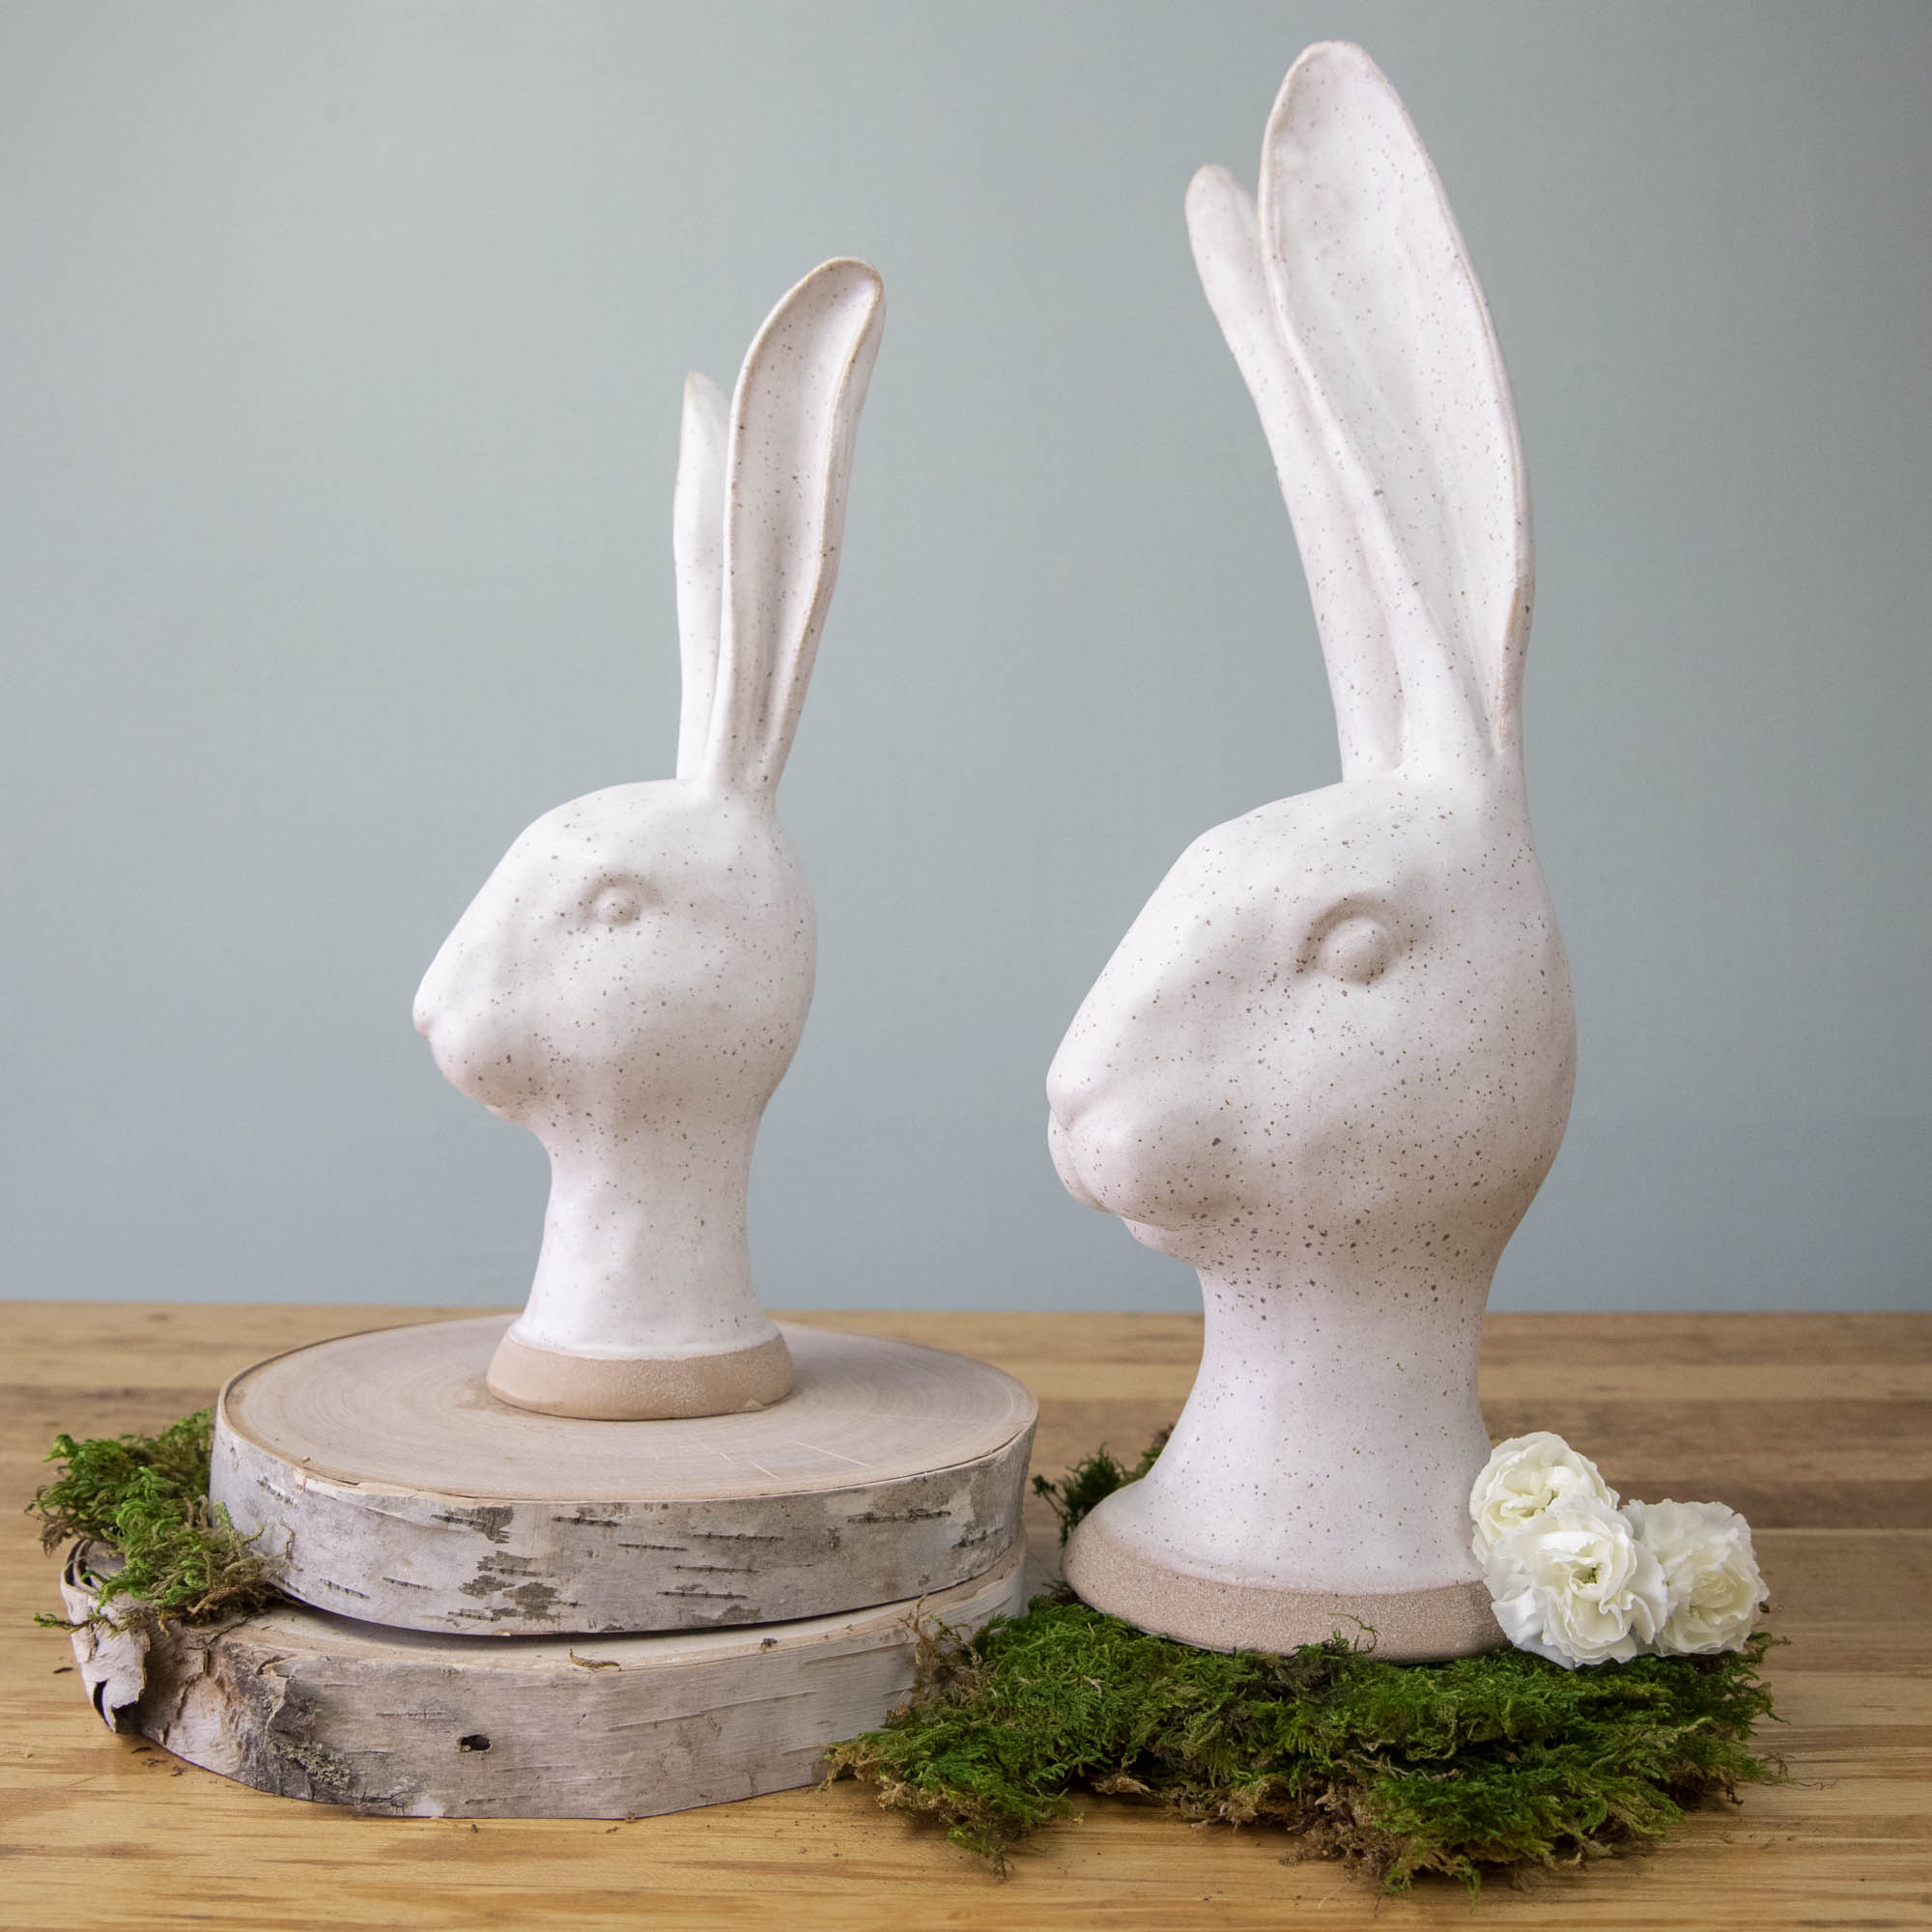 An enchanting HomArt Matte White Ceramic Hares heads on moss, serving as a charming garden decoration.